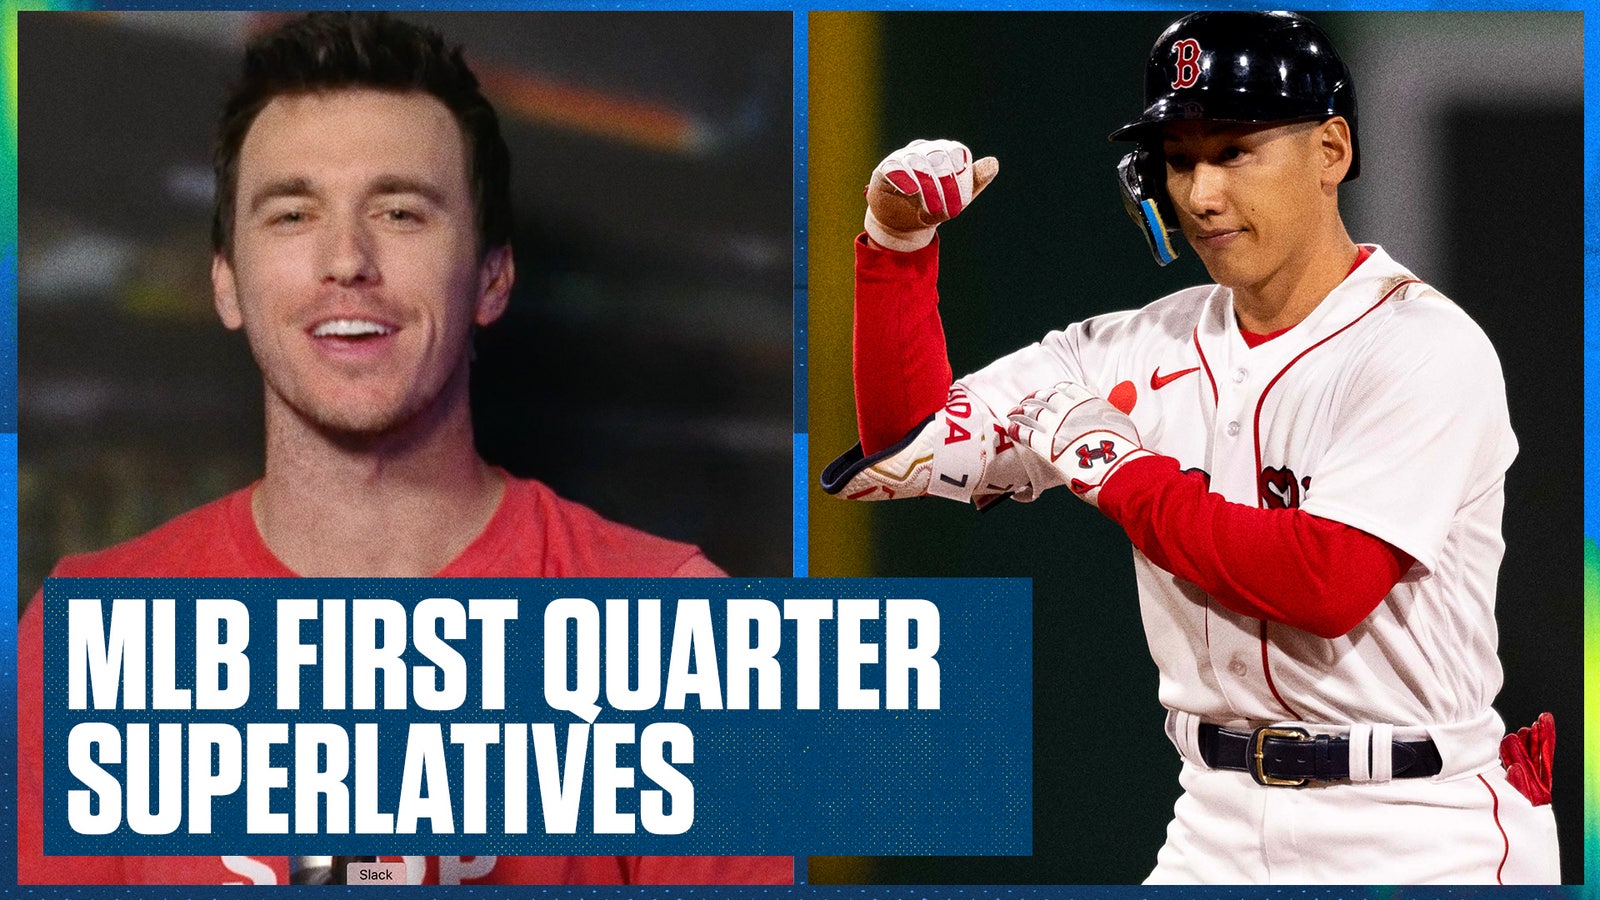 Sean Murphy, Masataka Yoshida & Rangers headline 1st quarter superlatives